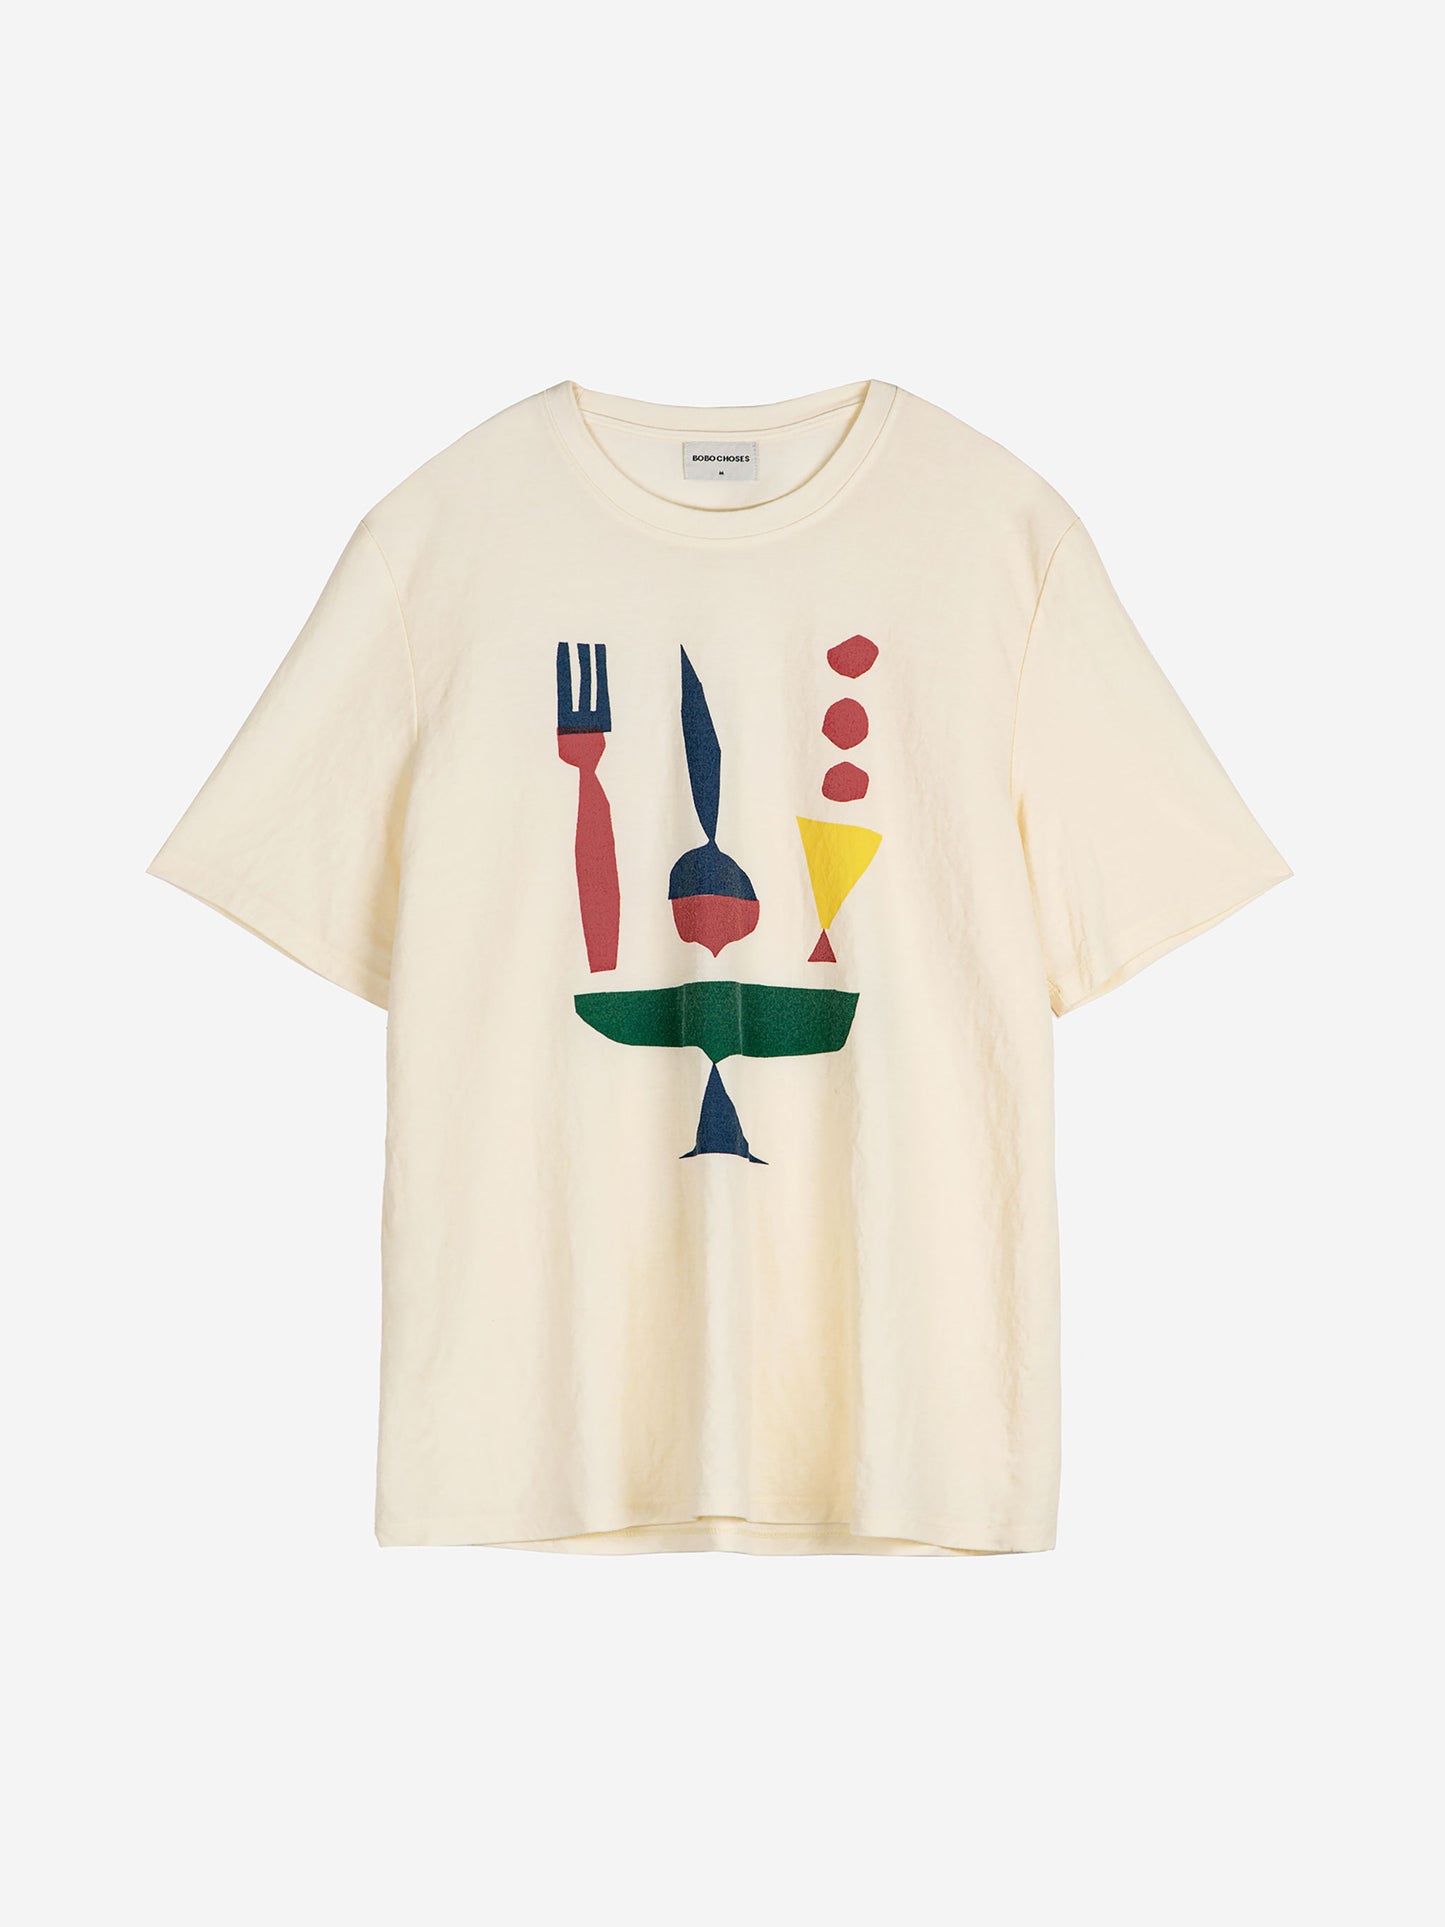 The Feast short sleeve T-shirt